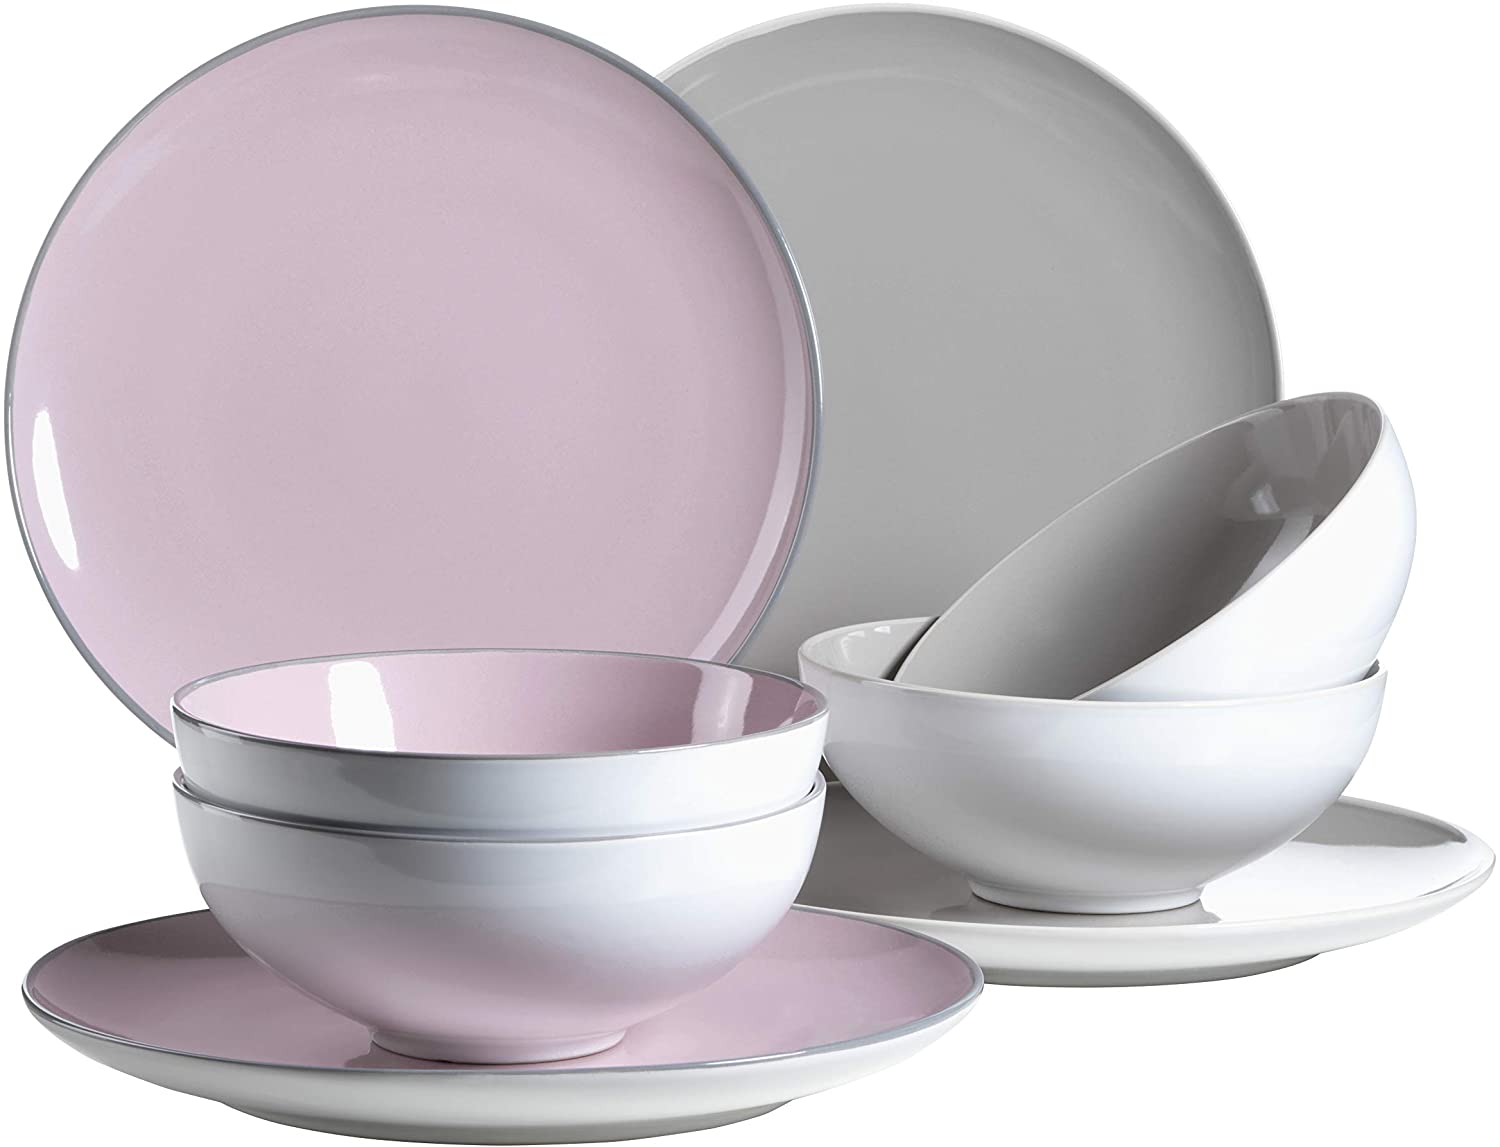 Maser Mäser, Maila Series 8-Piece Dinner Service Ceramic Crockery Set for 4 People Plate Set in Pink and Grey